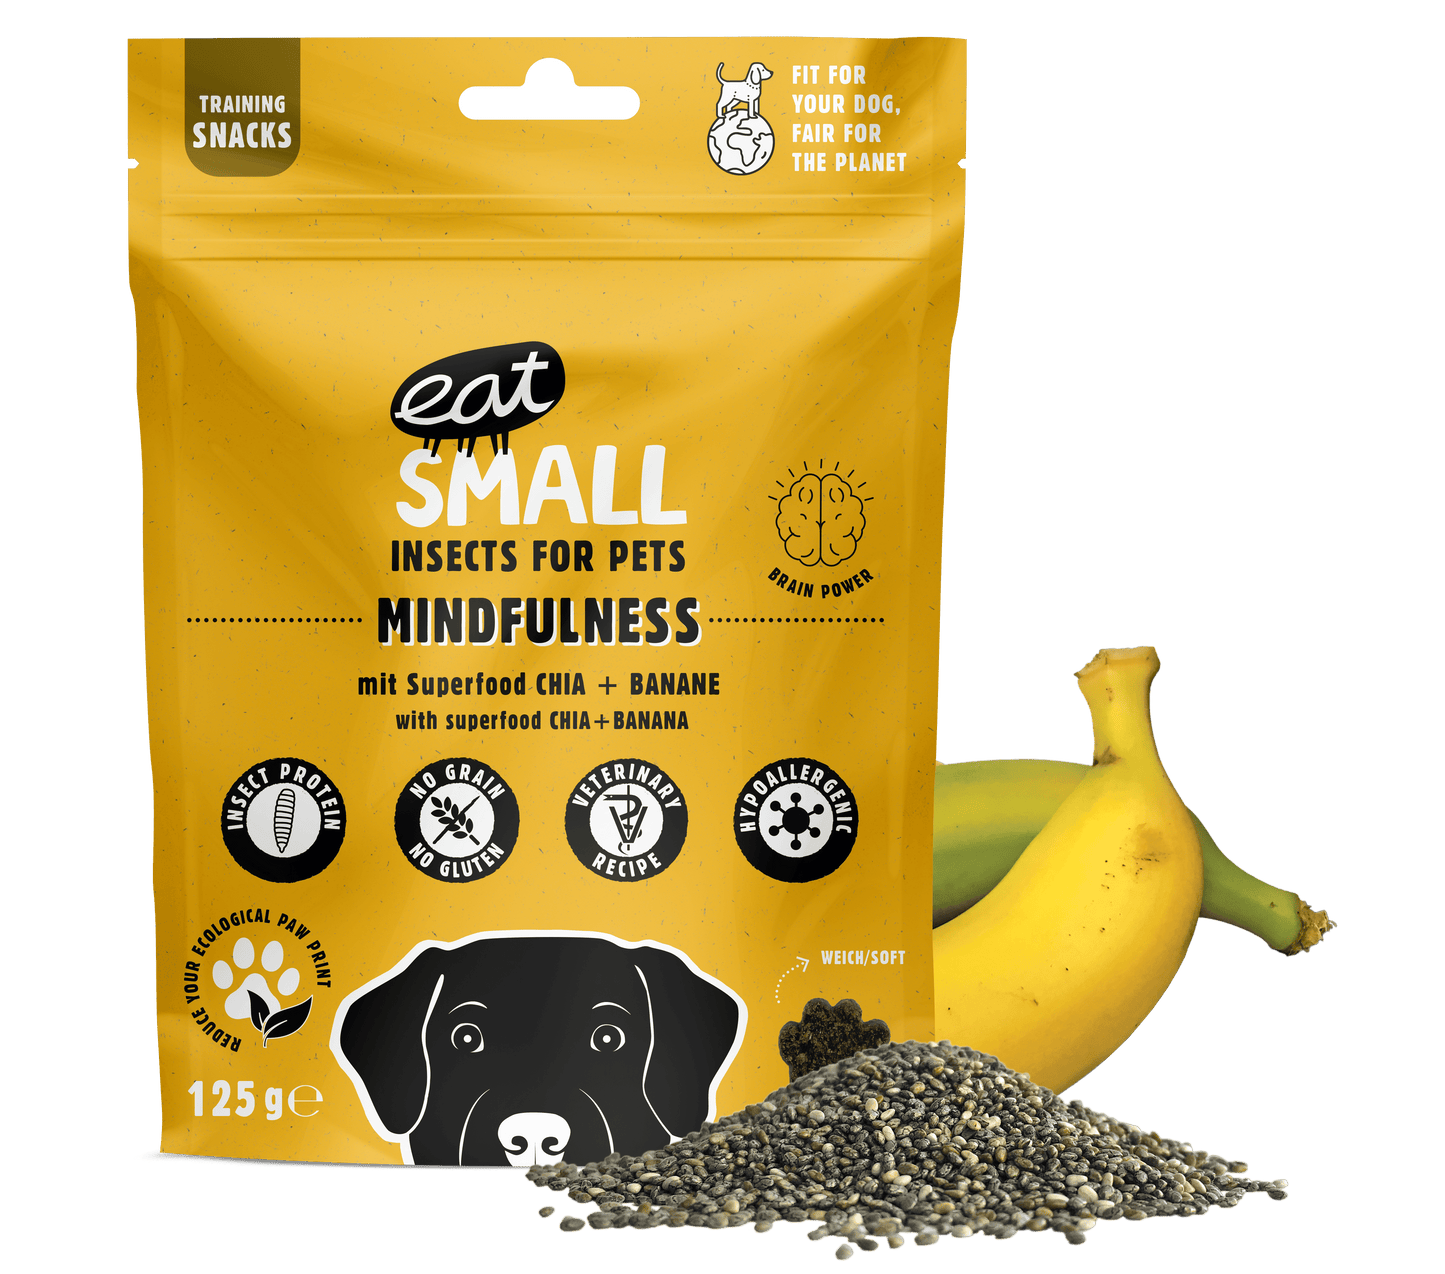 MINDFULNESS – Insect, Chia & Banana